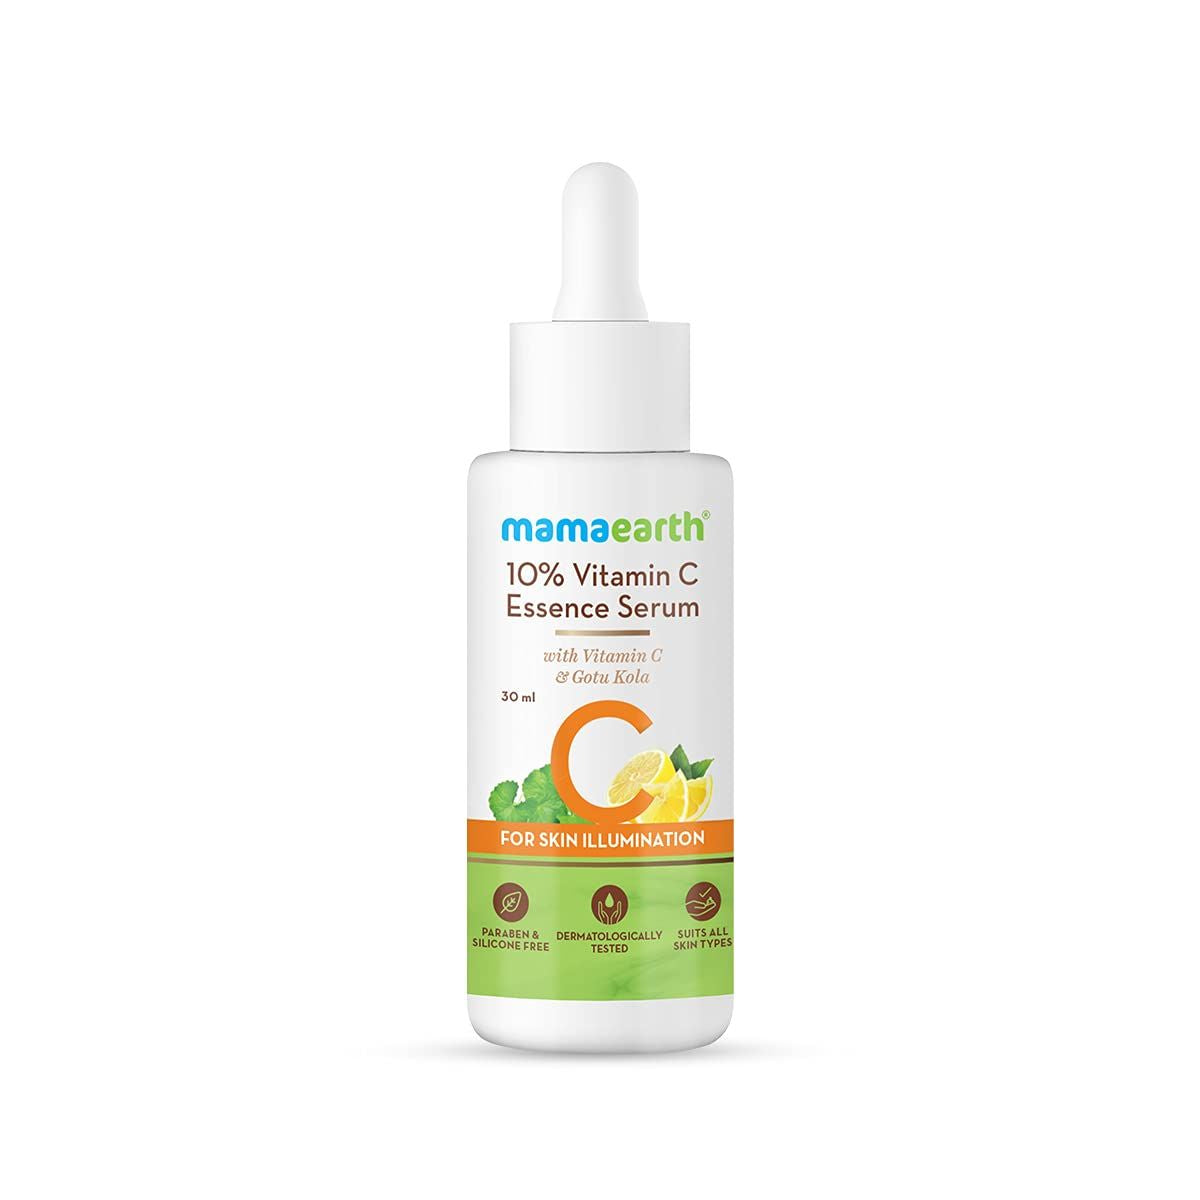 10% Vitamin C Essence Serum with Vitamin C and Gotu Kola for Skin Illumination – 30ml